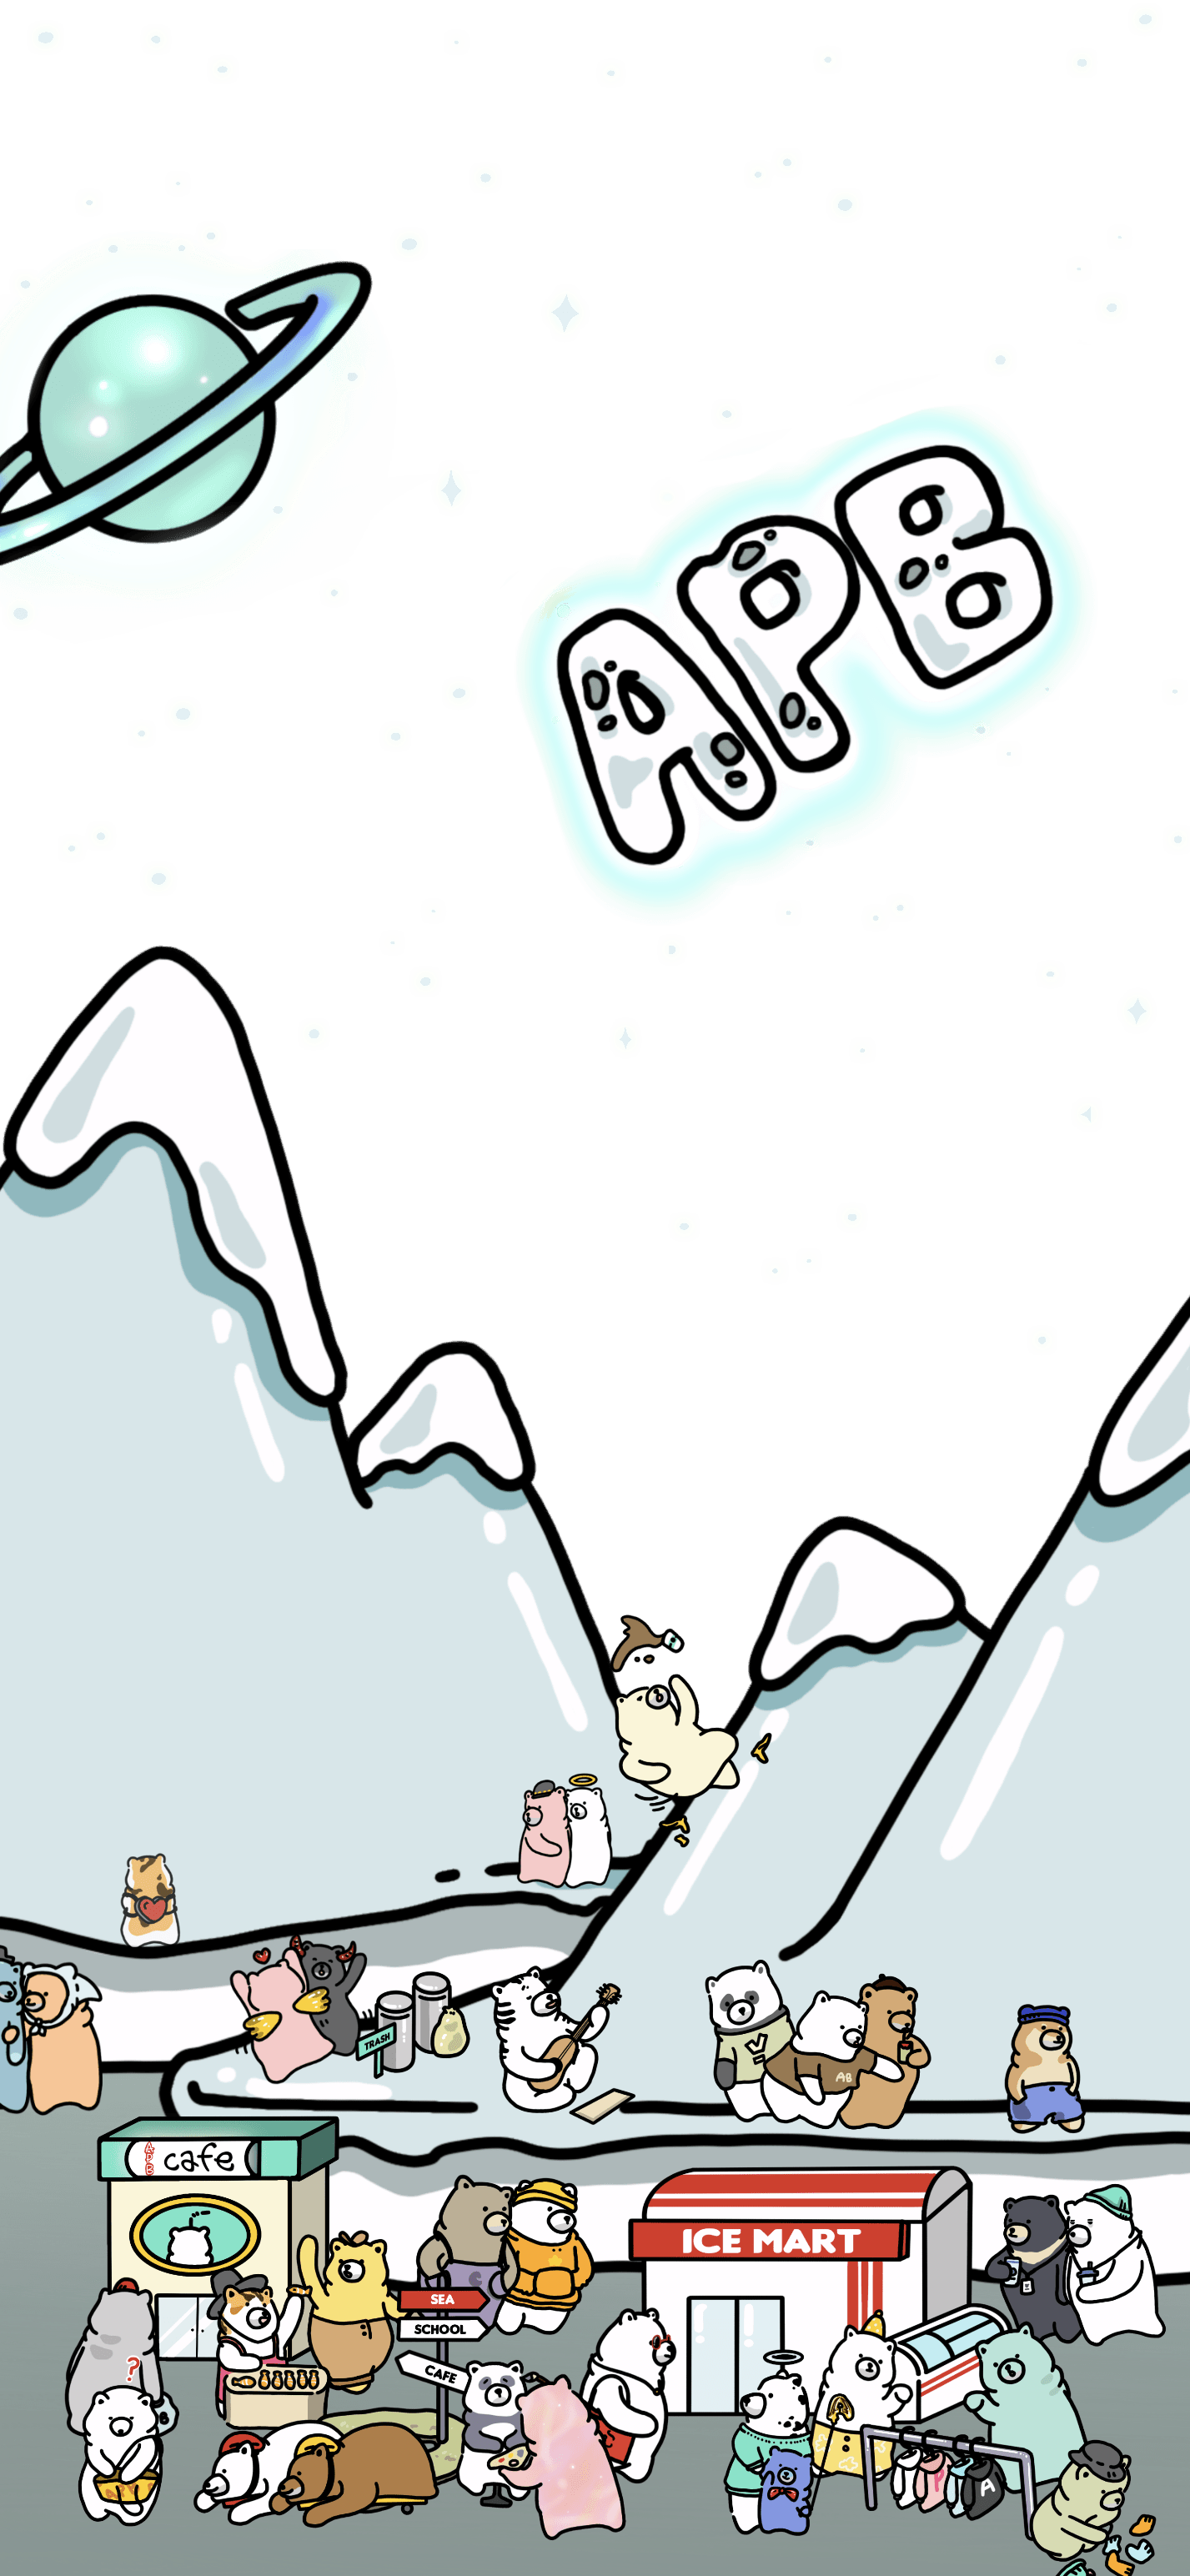 ice-land